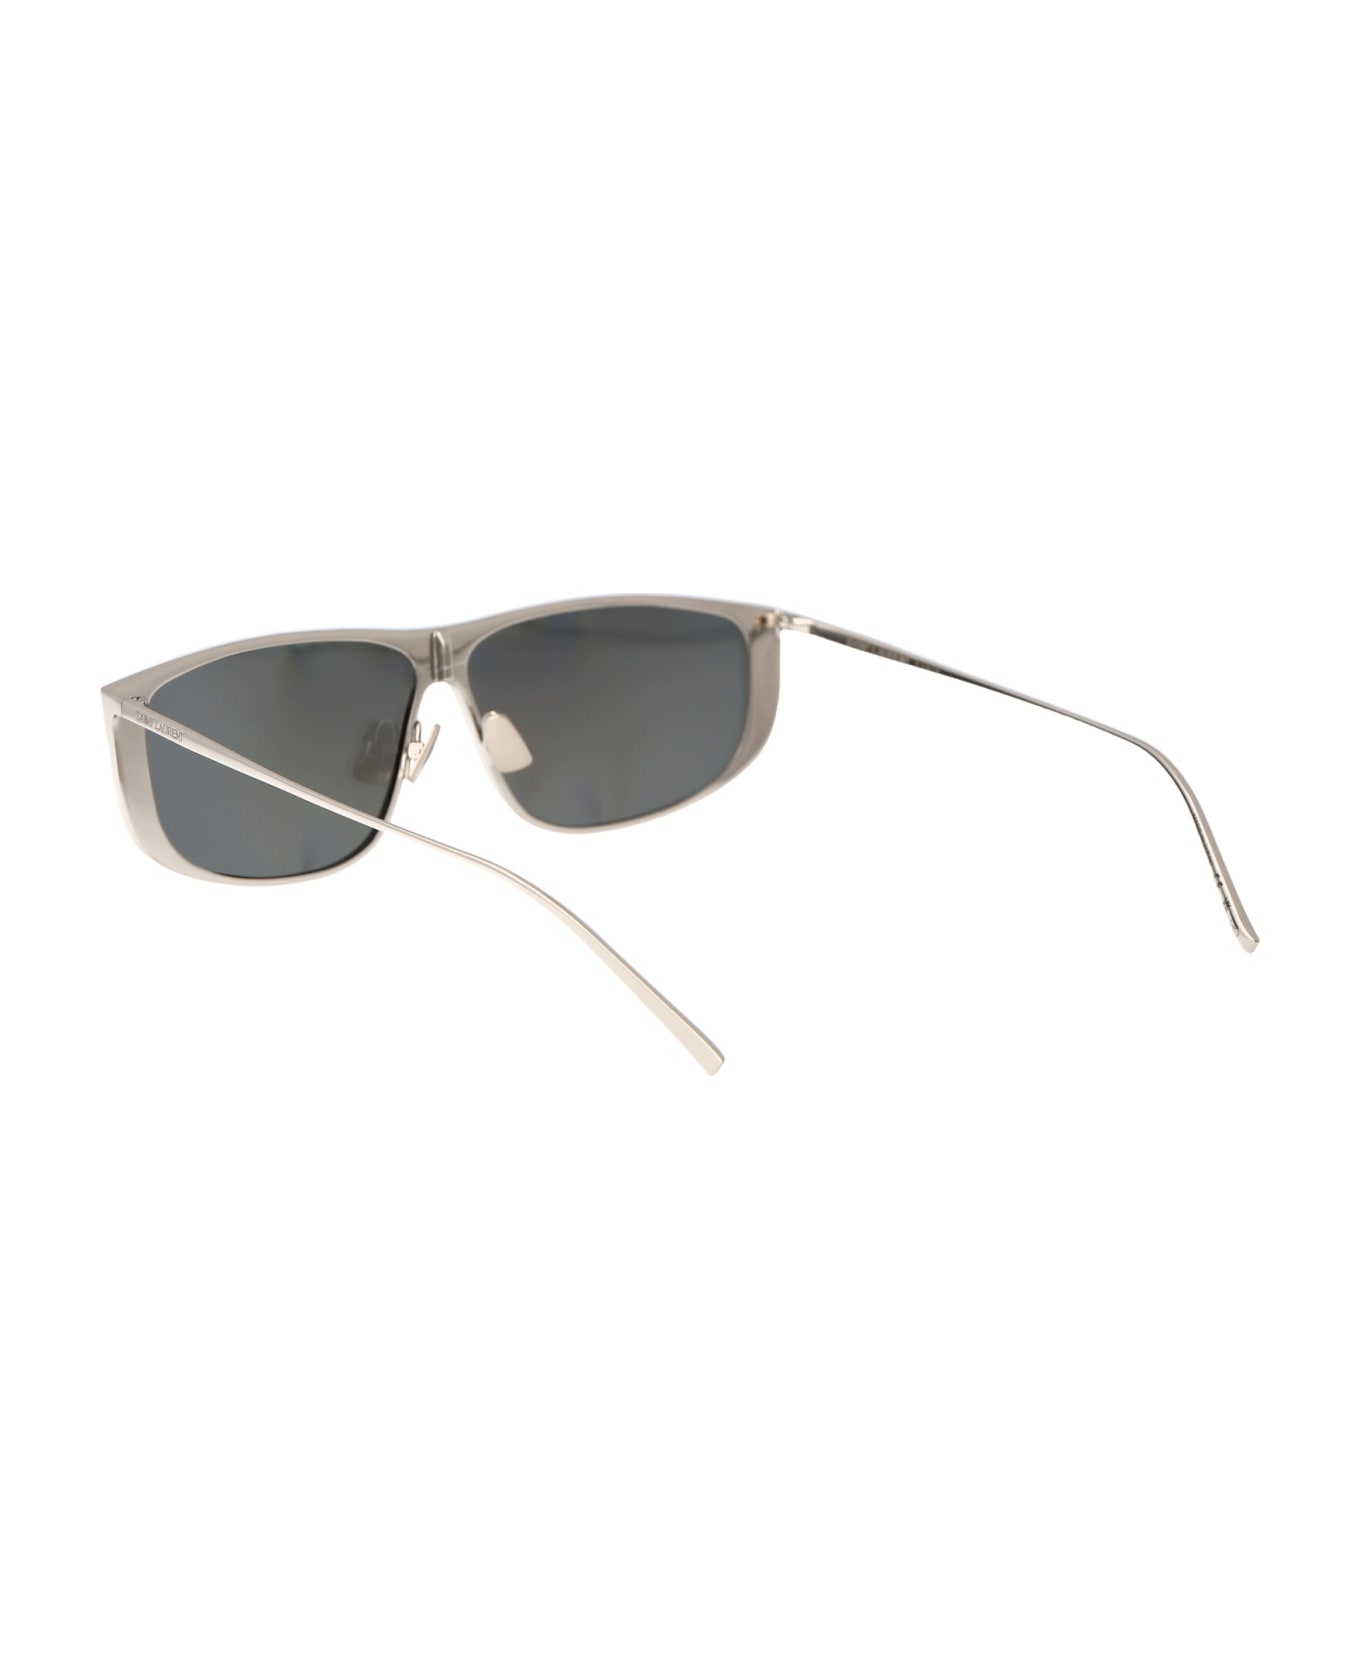 Saint Laurent Eyewear Sl 605 Luna Sunglasses - 003 SILVER SILVER SILVER